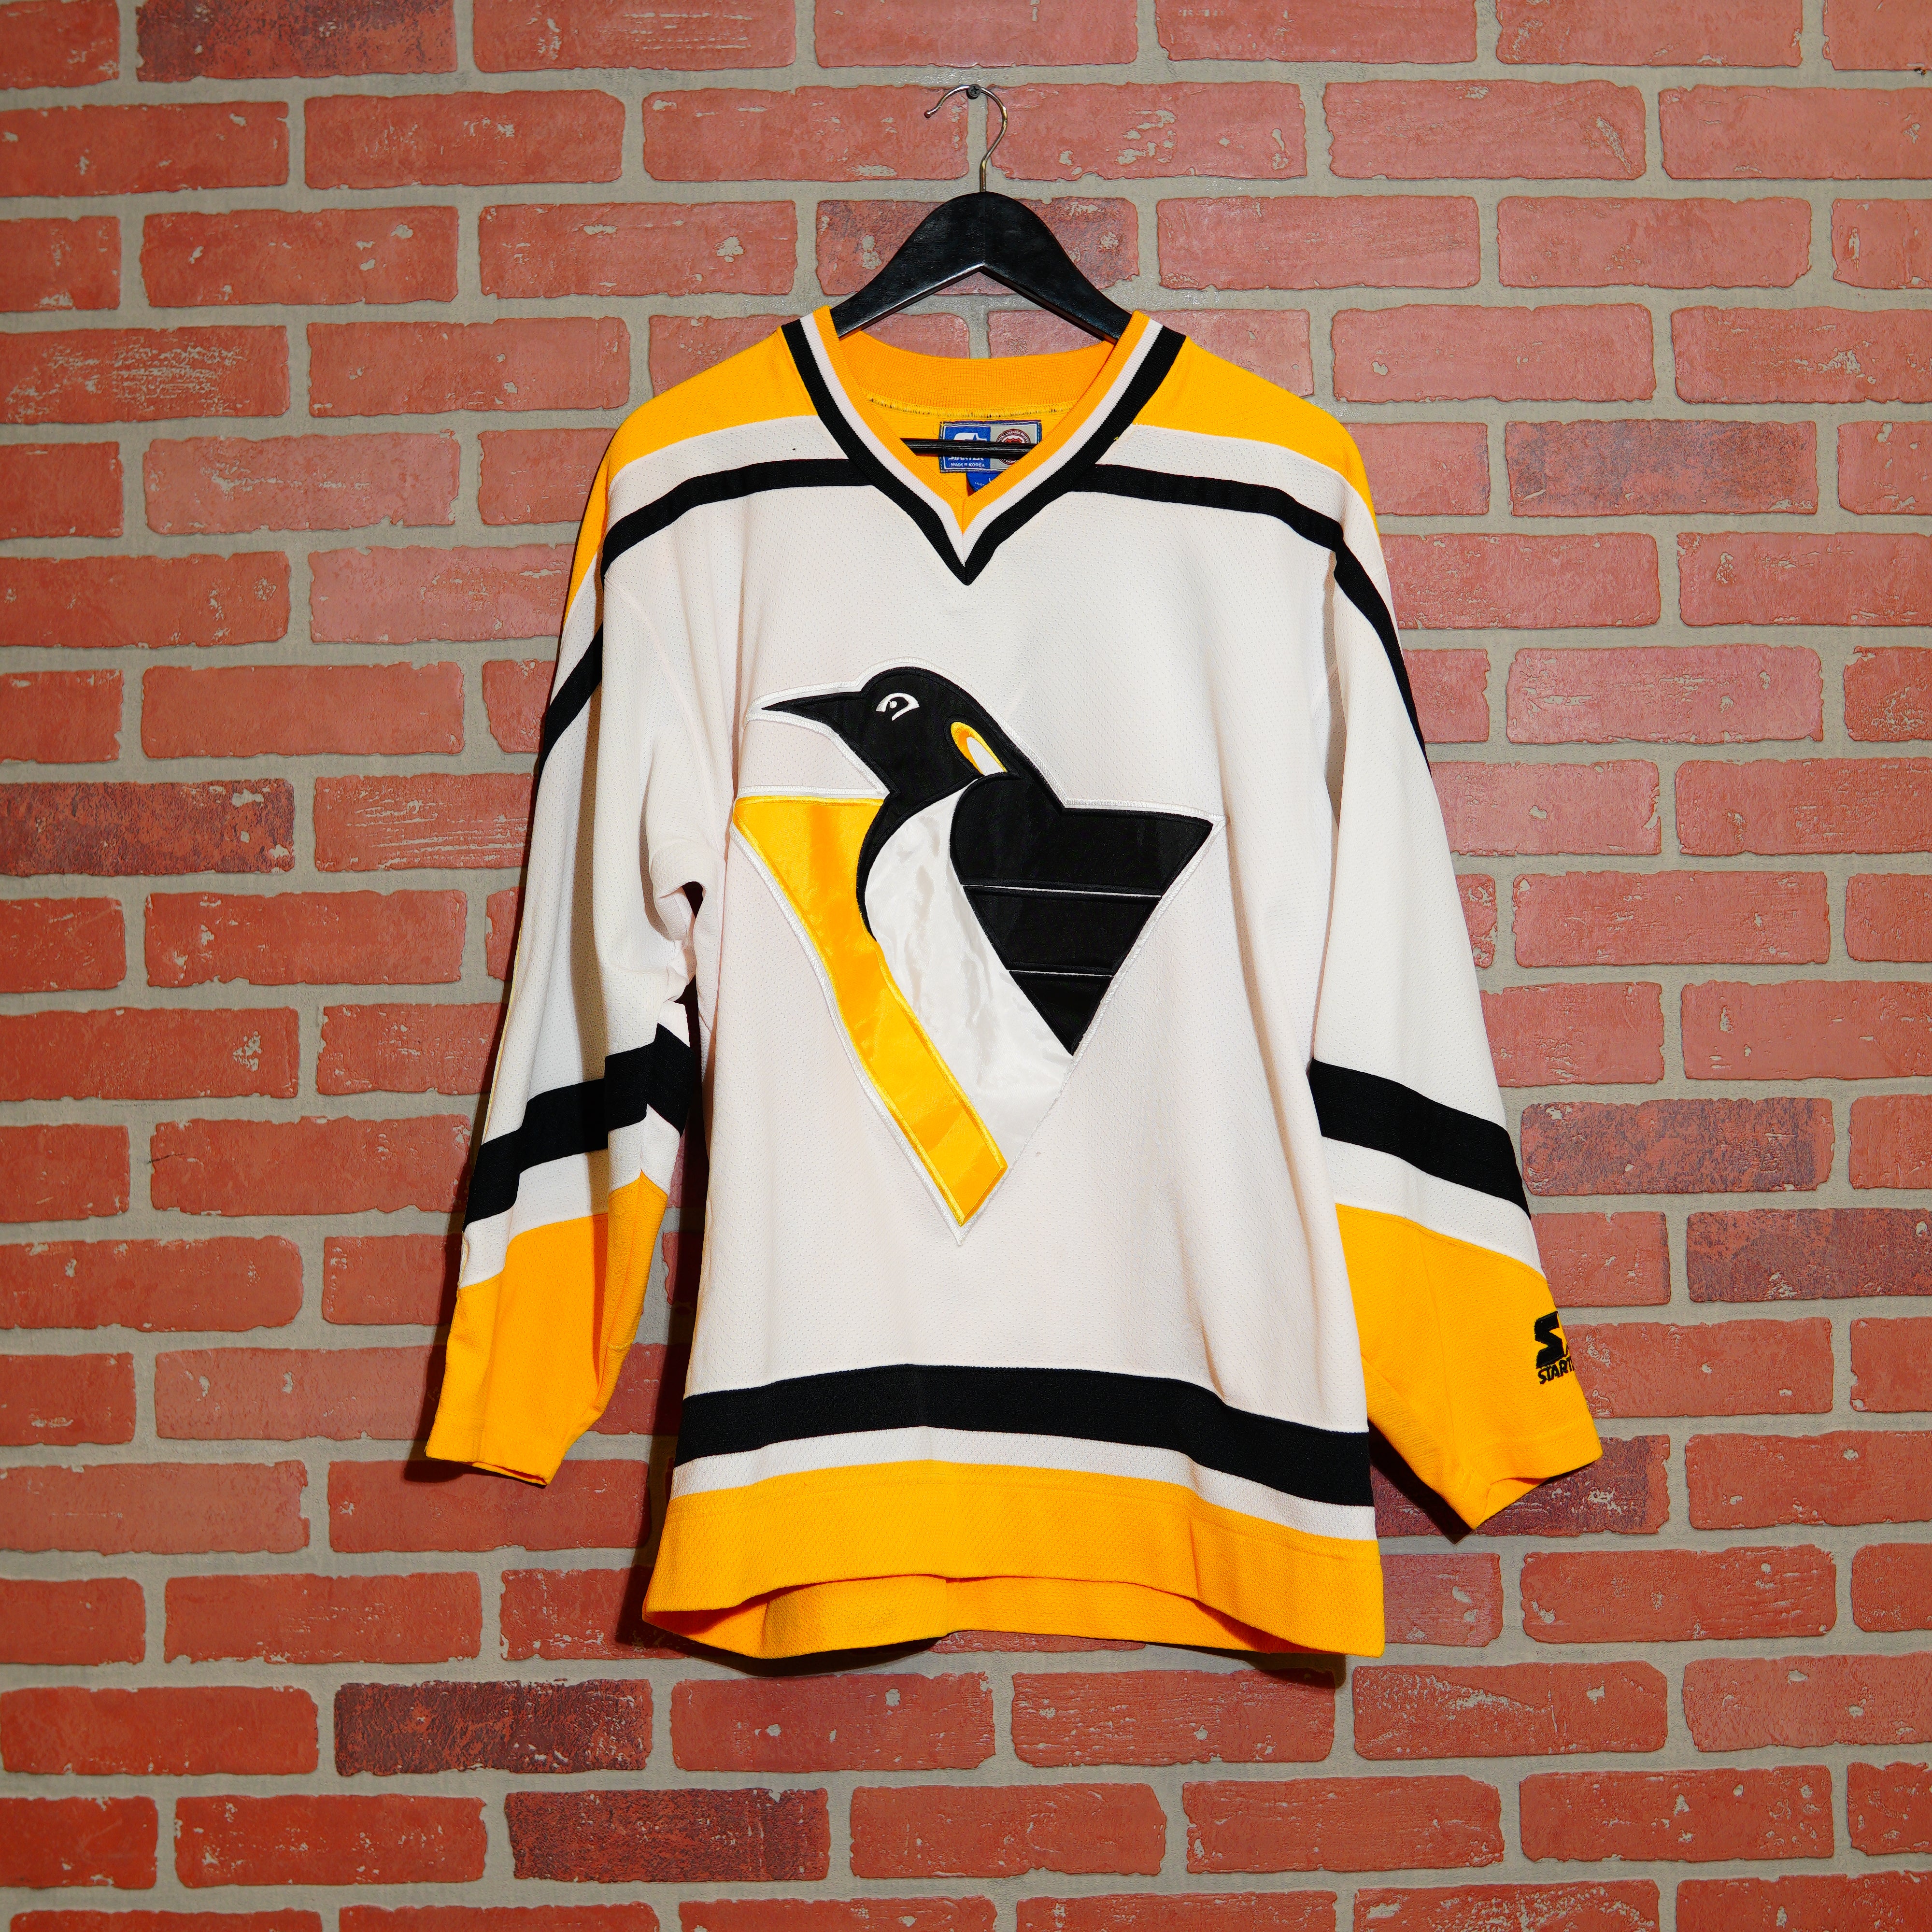 Pittsburgh Penguins Jerseys in Pittsburgh Penguins Team Shop